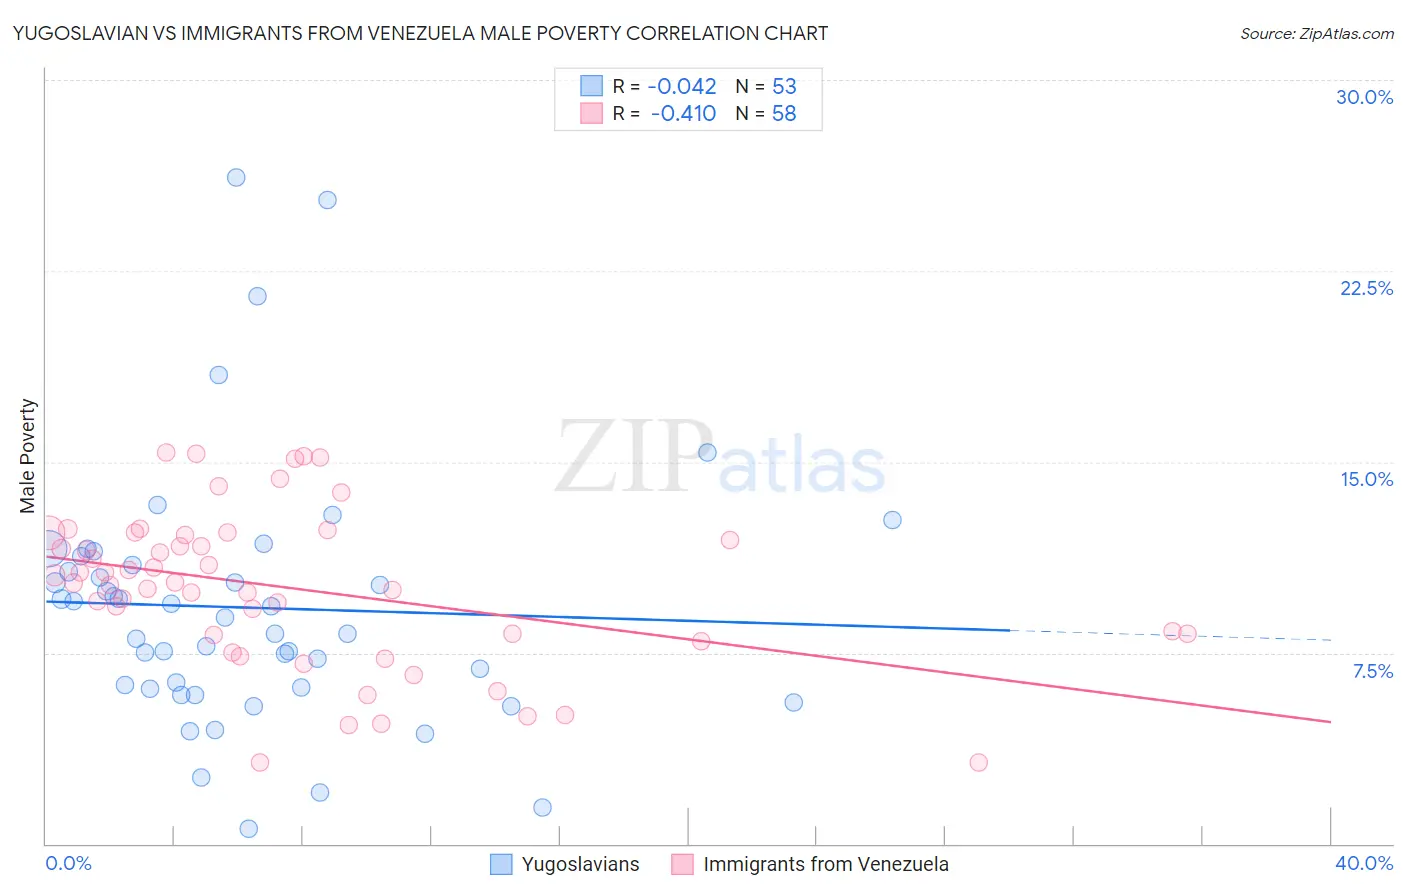 Yugoslavian vs Immigrants from Venezuela Male Poverty